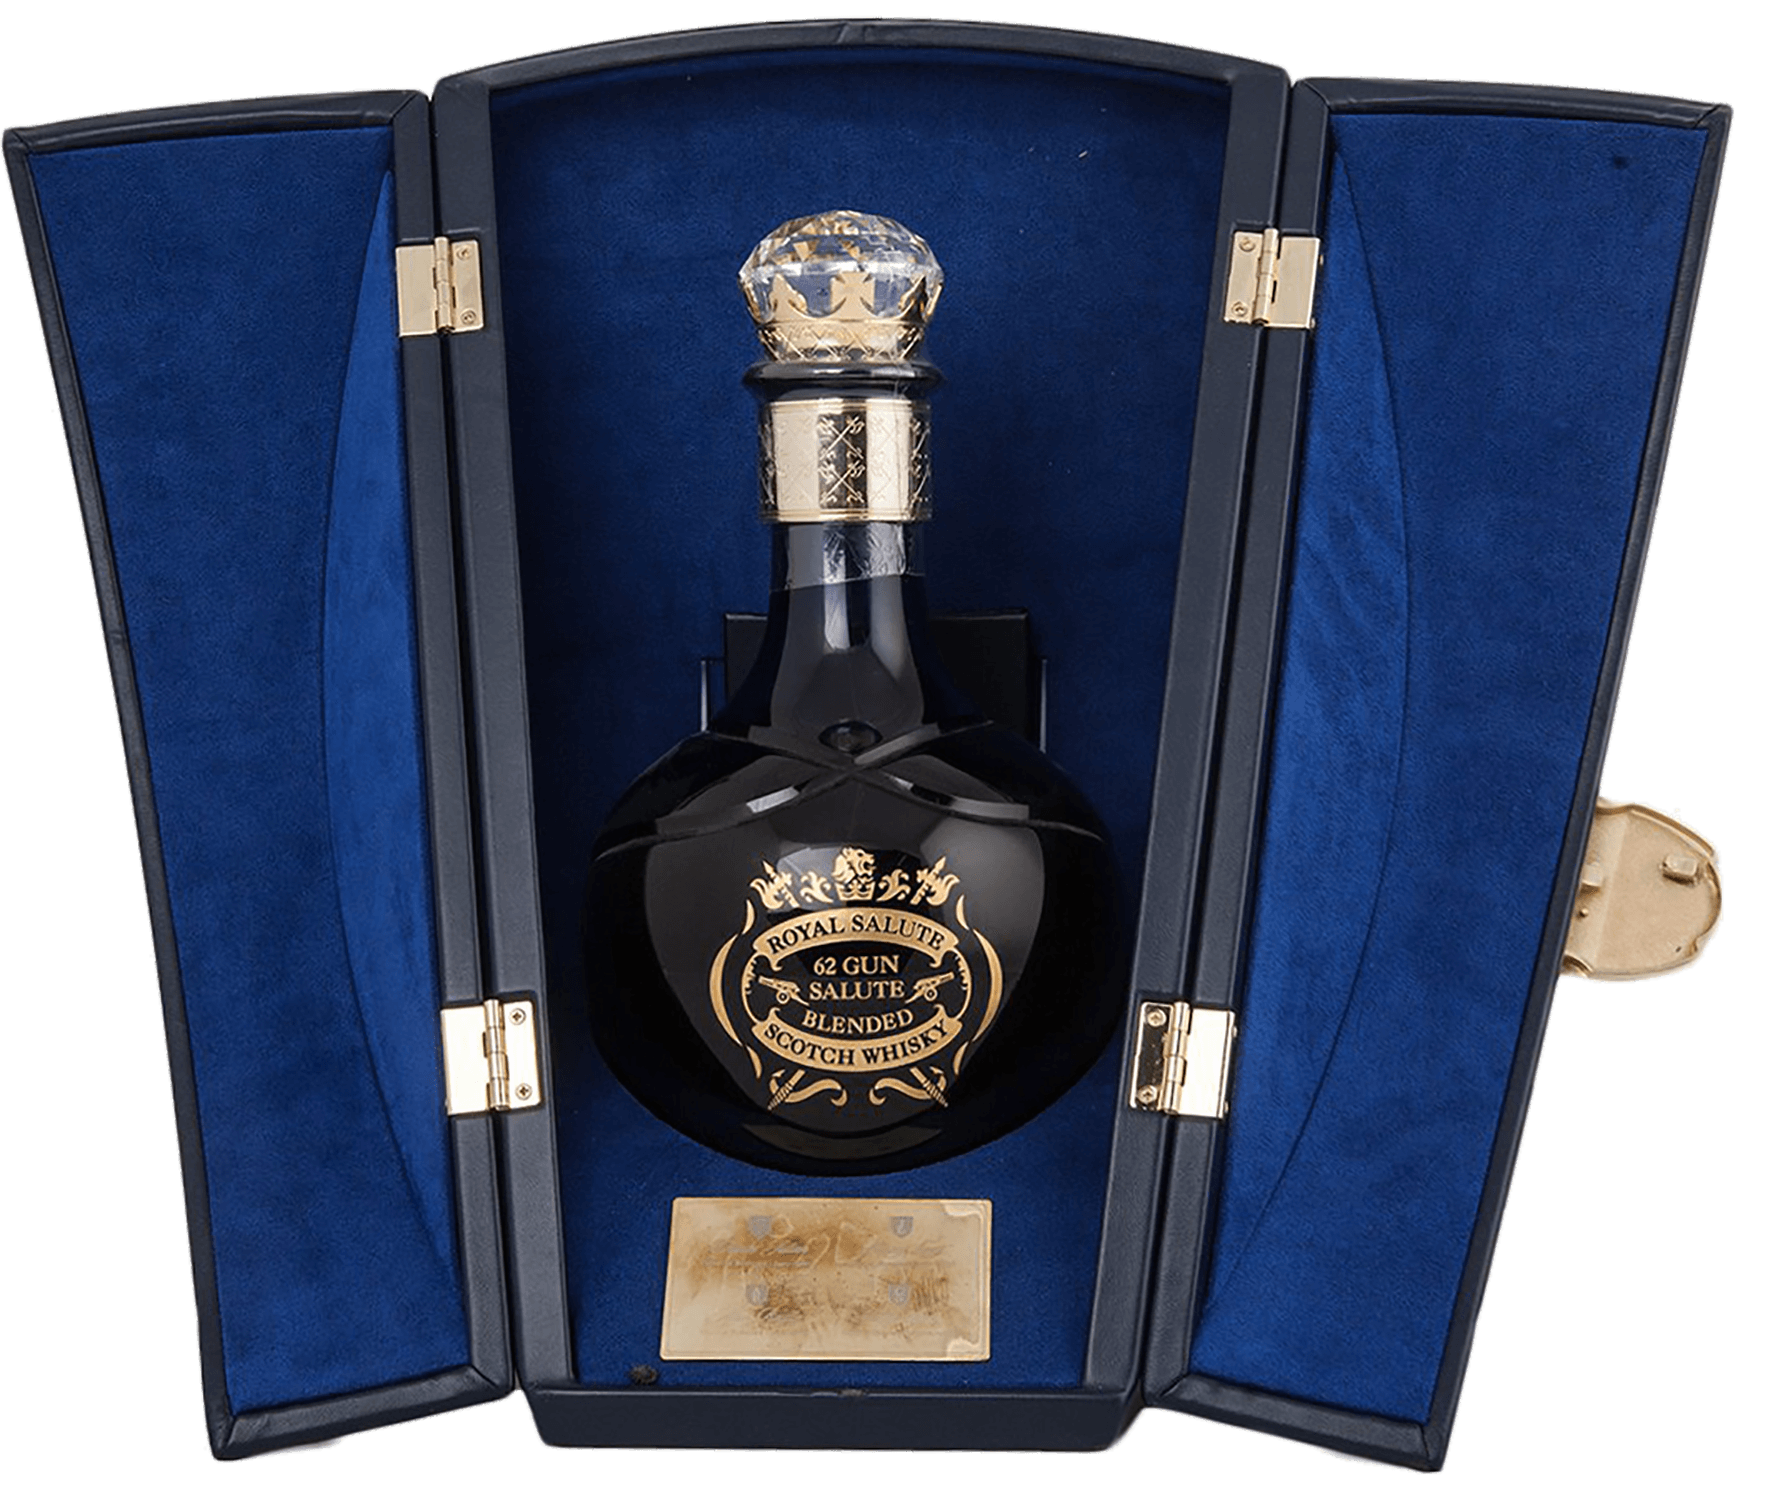 Chivas Regal Royal Salute 62 Gun Salute blended scotch whisky (gift box) royal salute blended scotch whisky 21 y o gift box